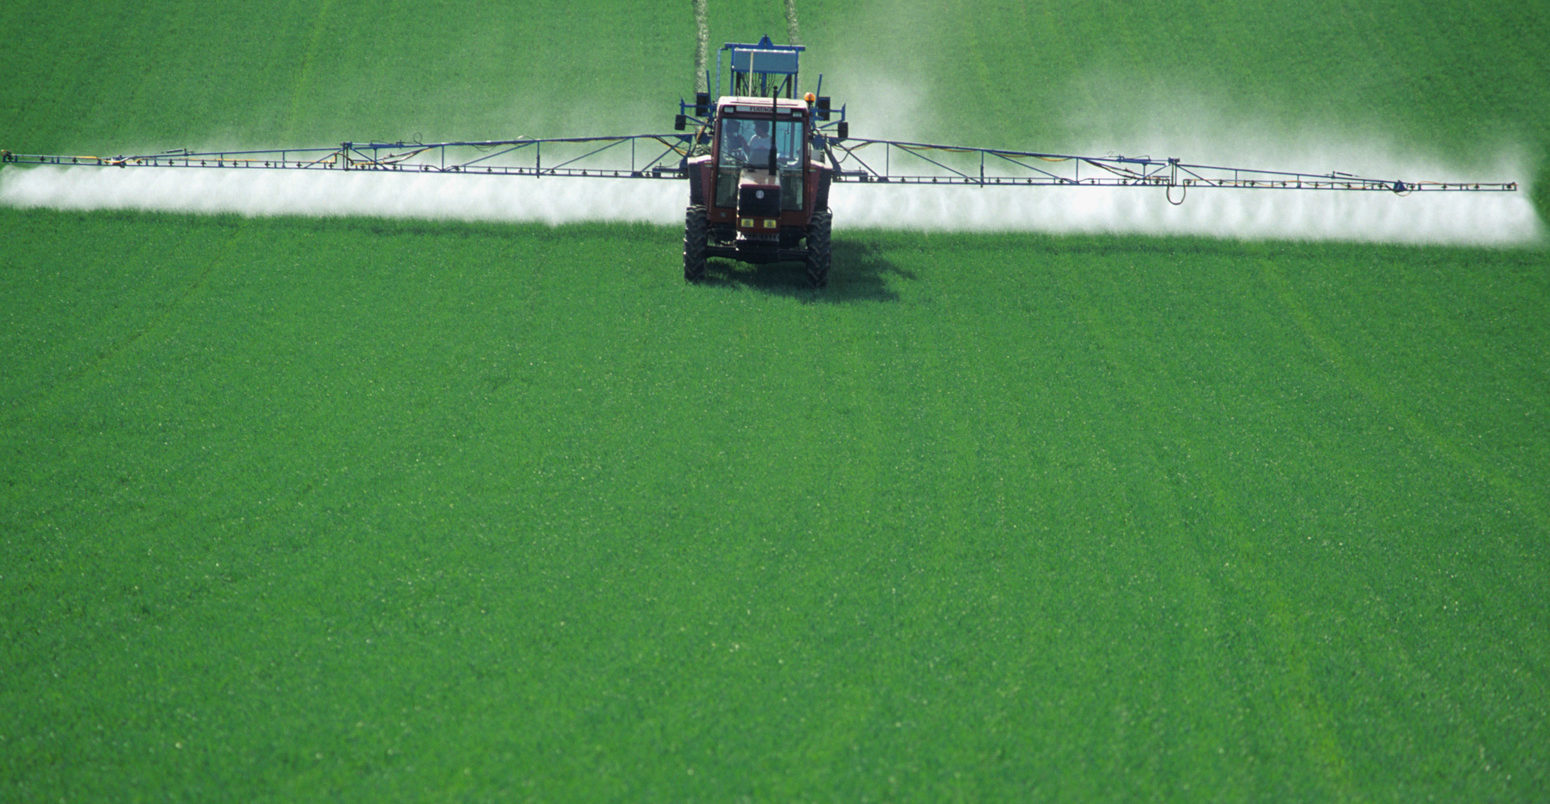 Fertiliser being sprayed on crops in France